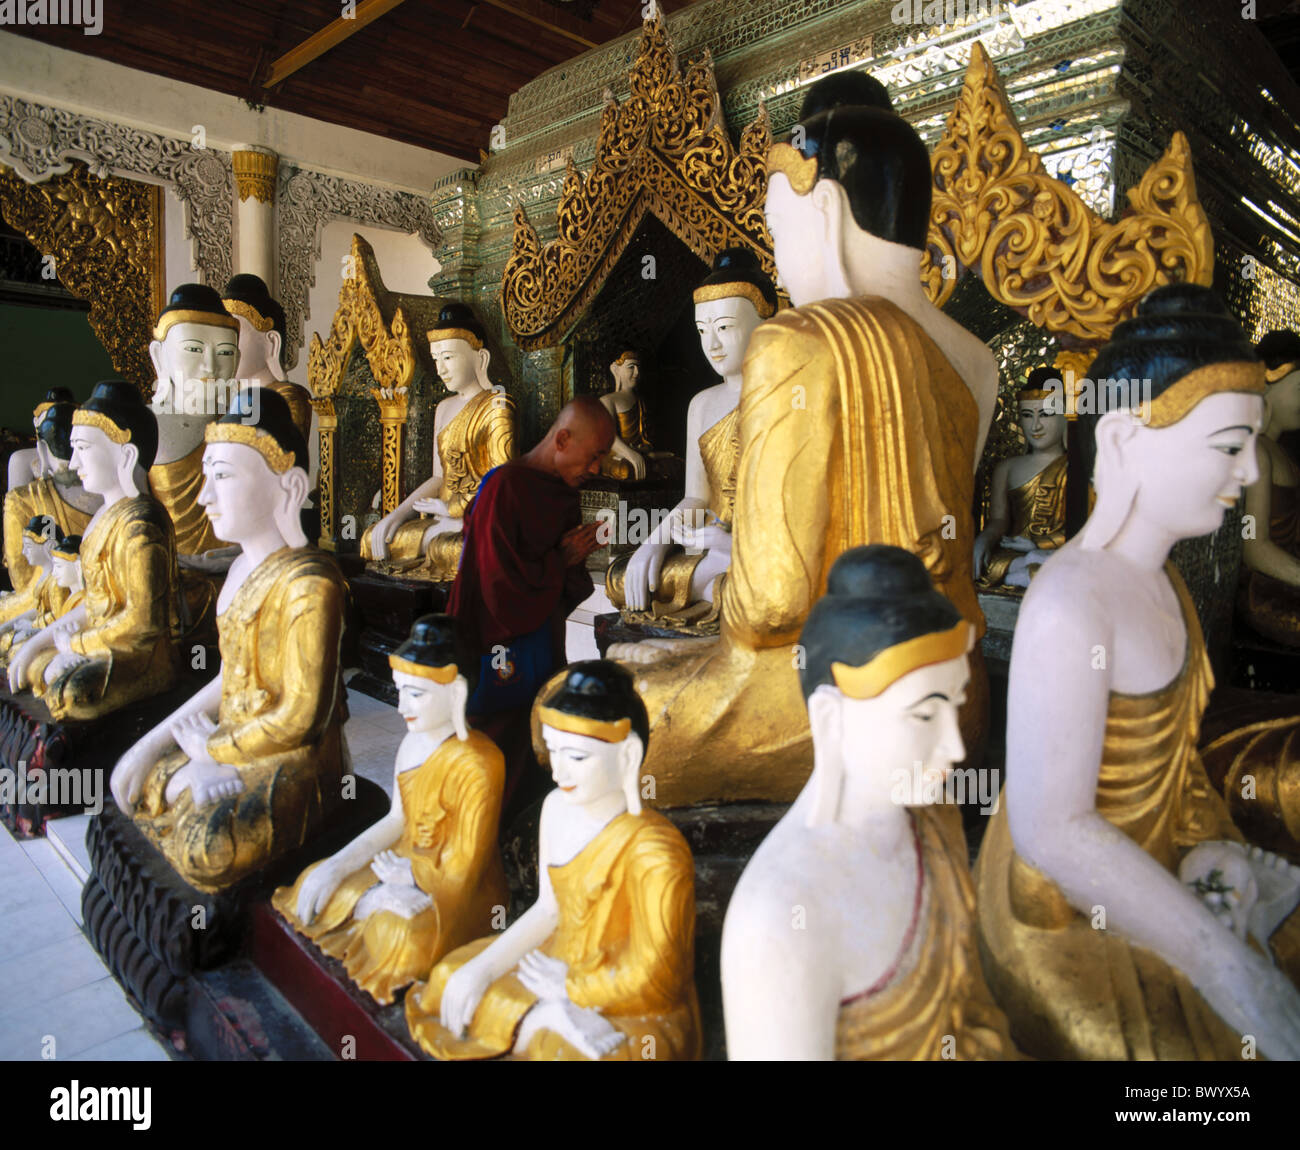 Architektur Asien Burma Asien Buddhismus Figuren golden innen Kultur Kunst Fertigkeit Mönche Myanmar Religion S Stockfoto